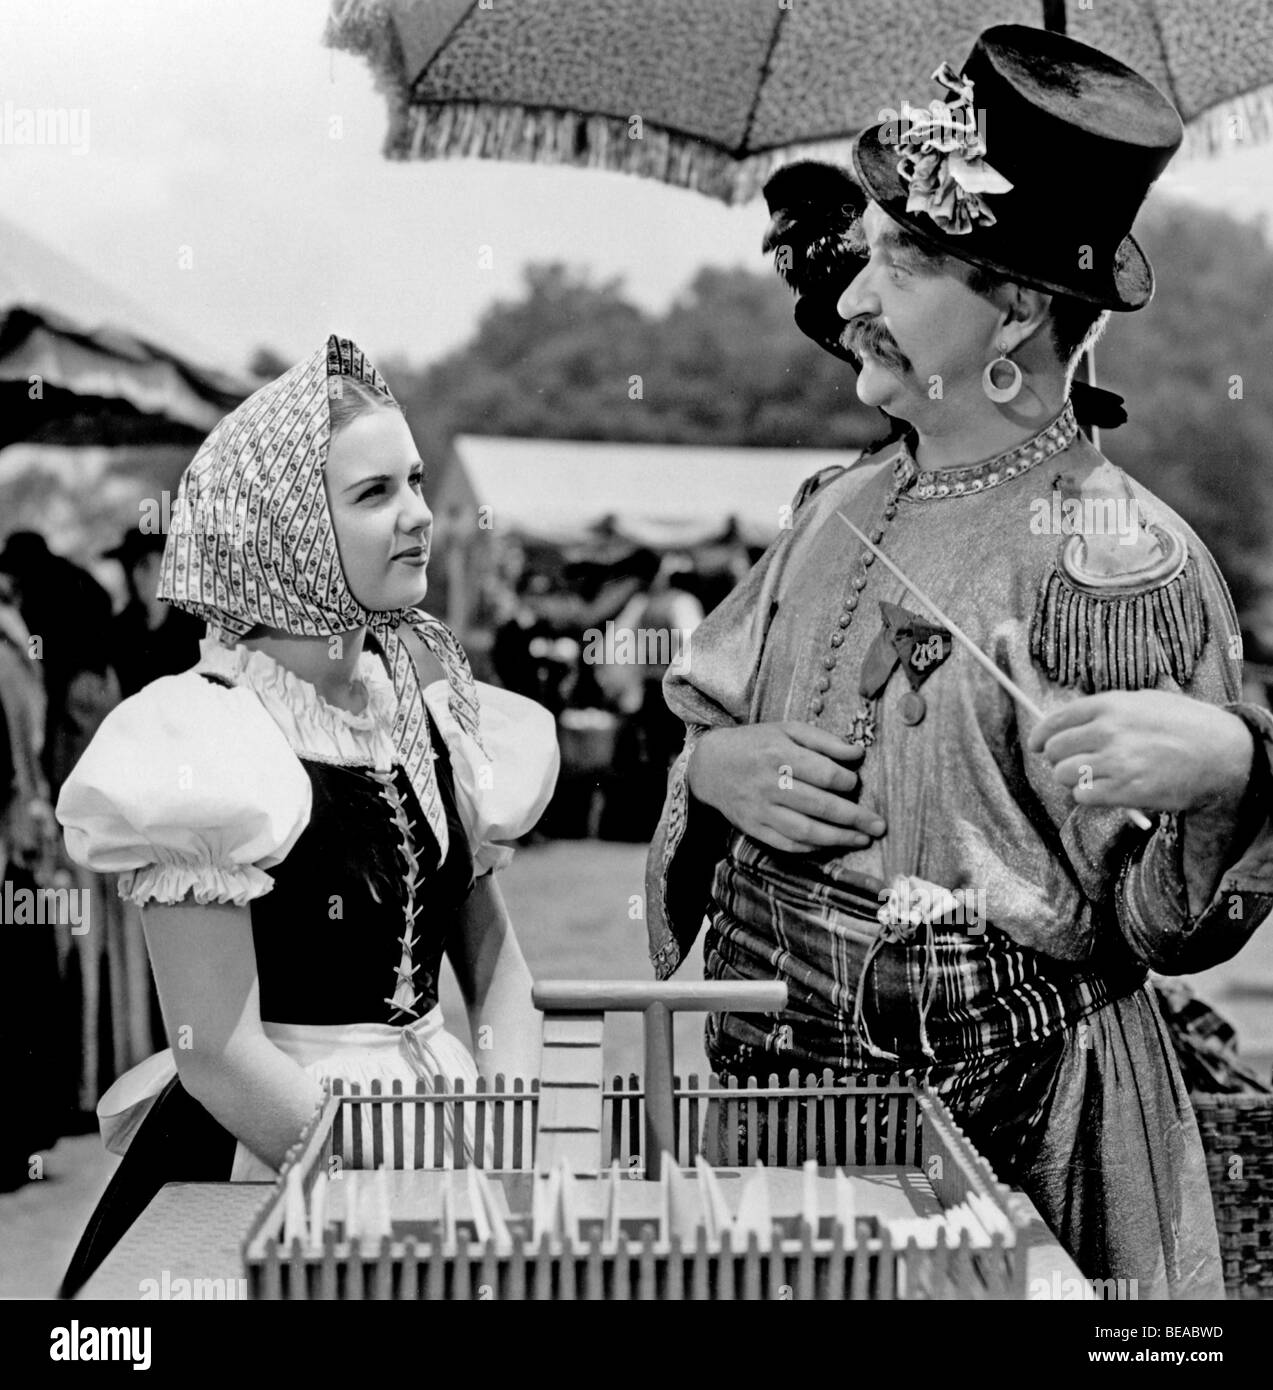 SPRING PARADE - 1940 Universal film with Deanna Durbin Stock Photo - Alamy